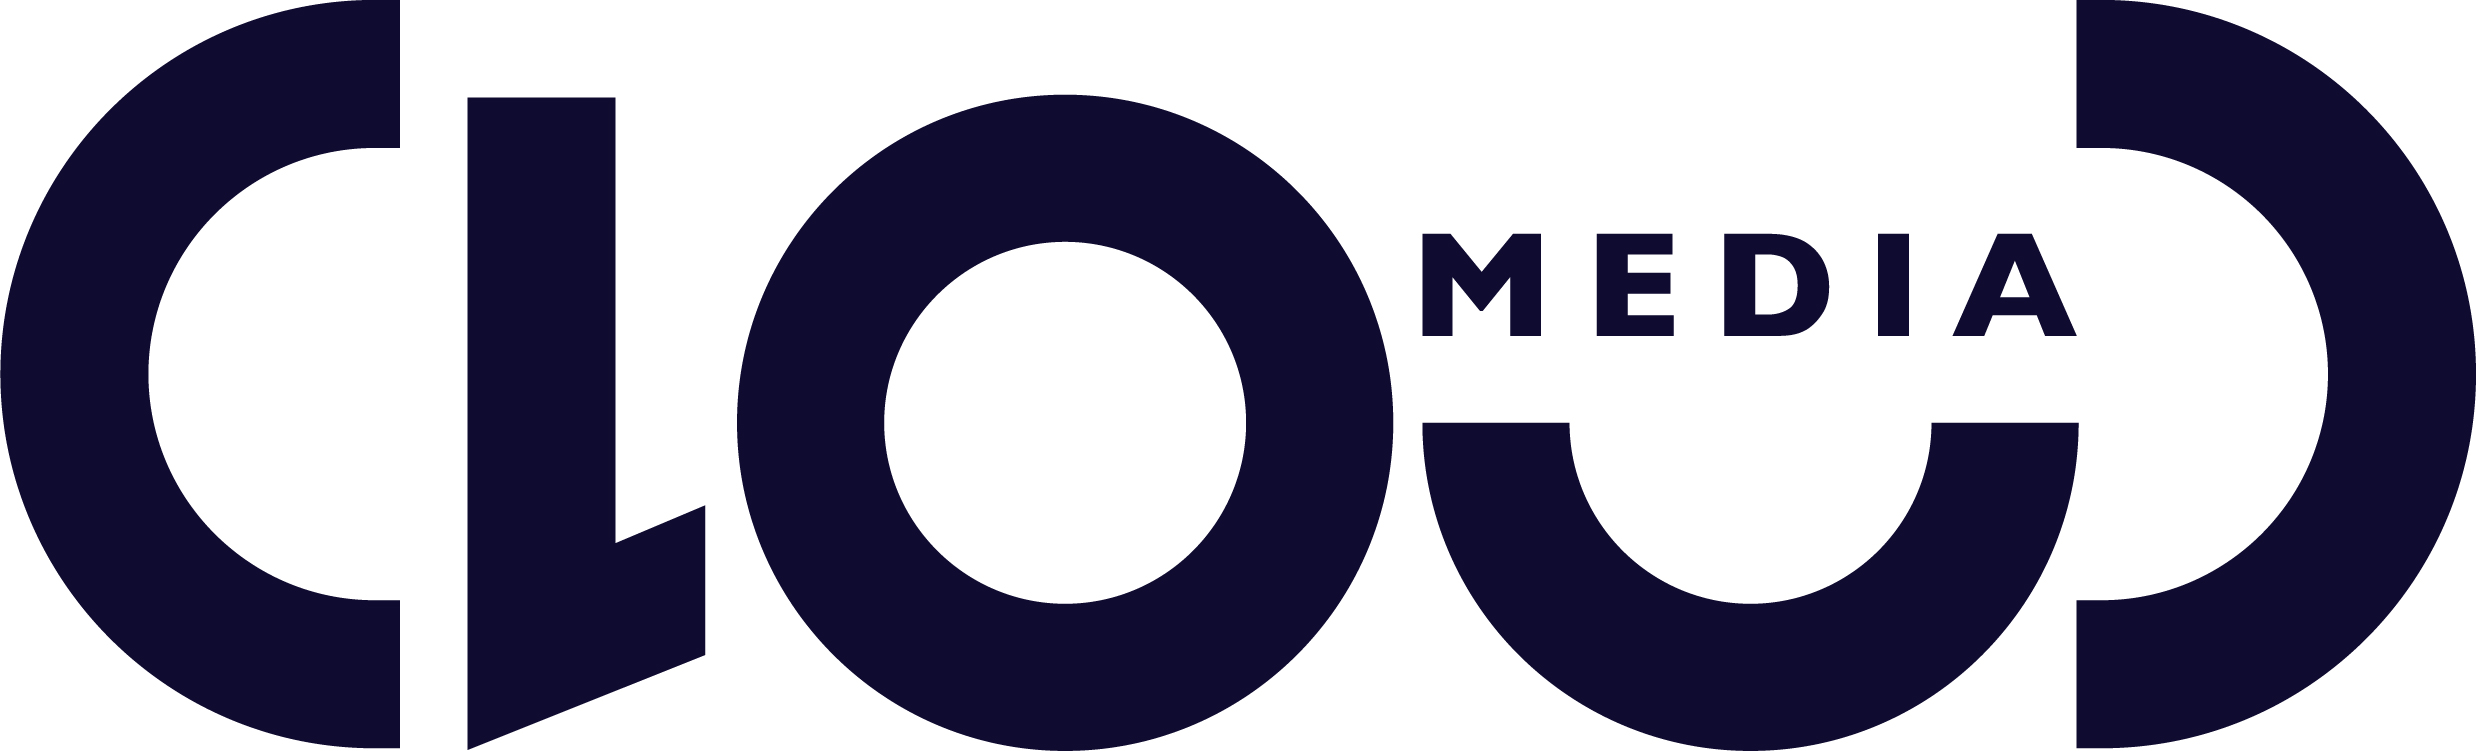 cloud media logo